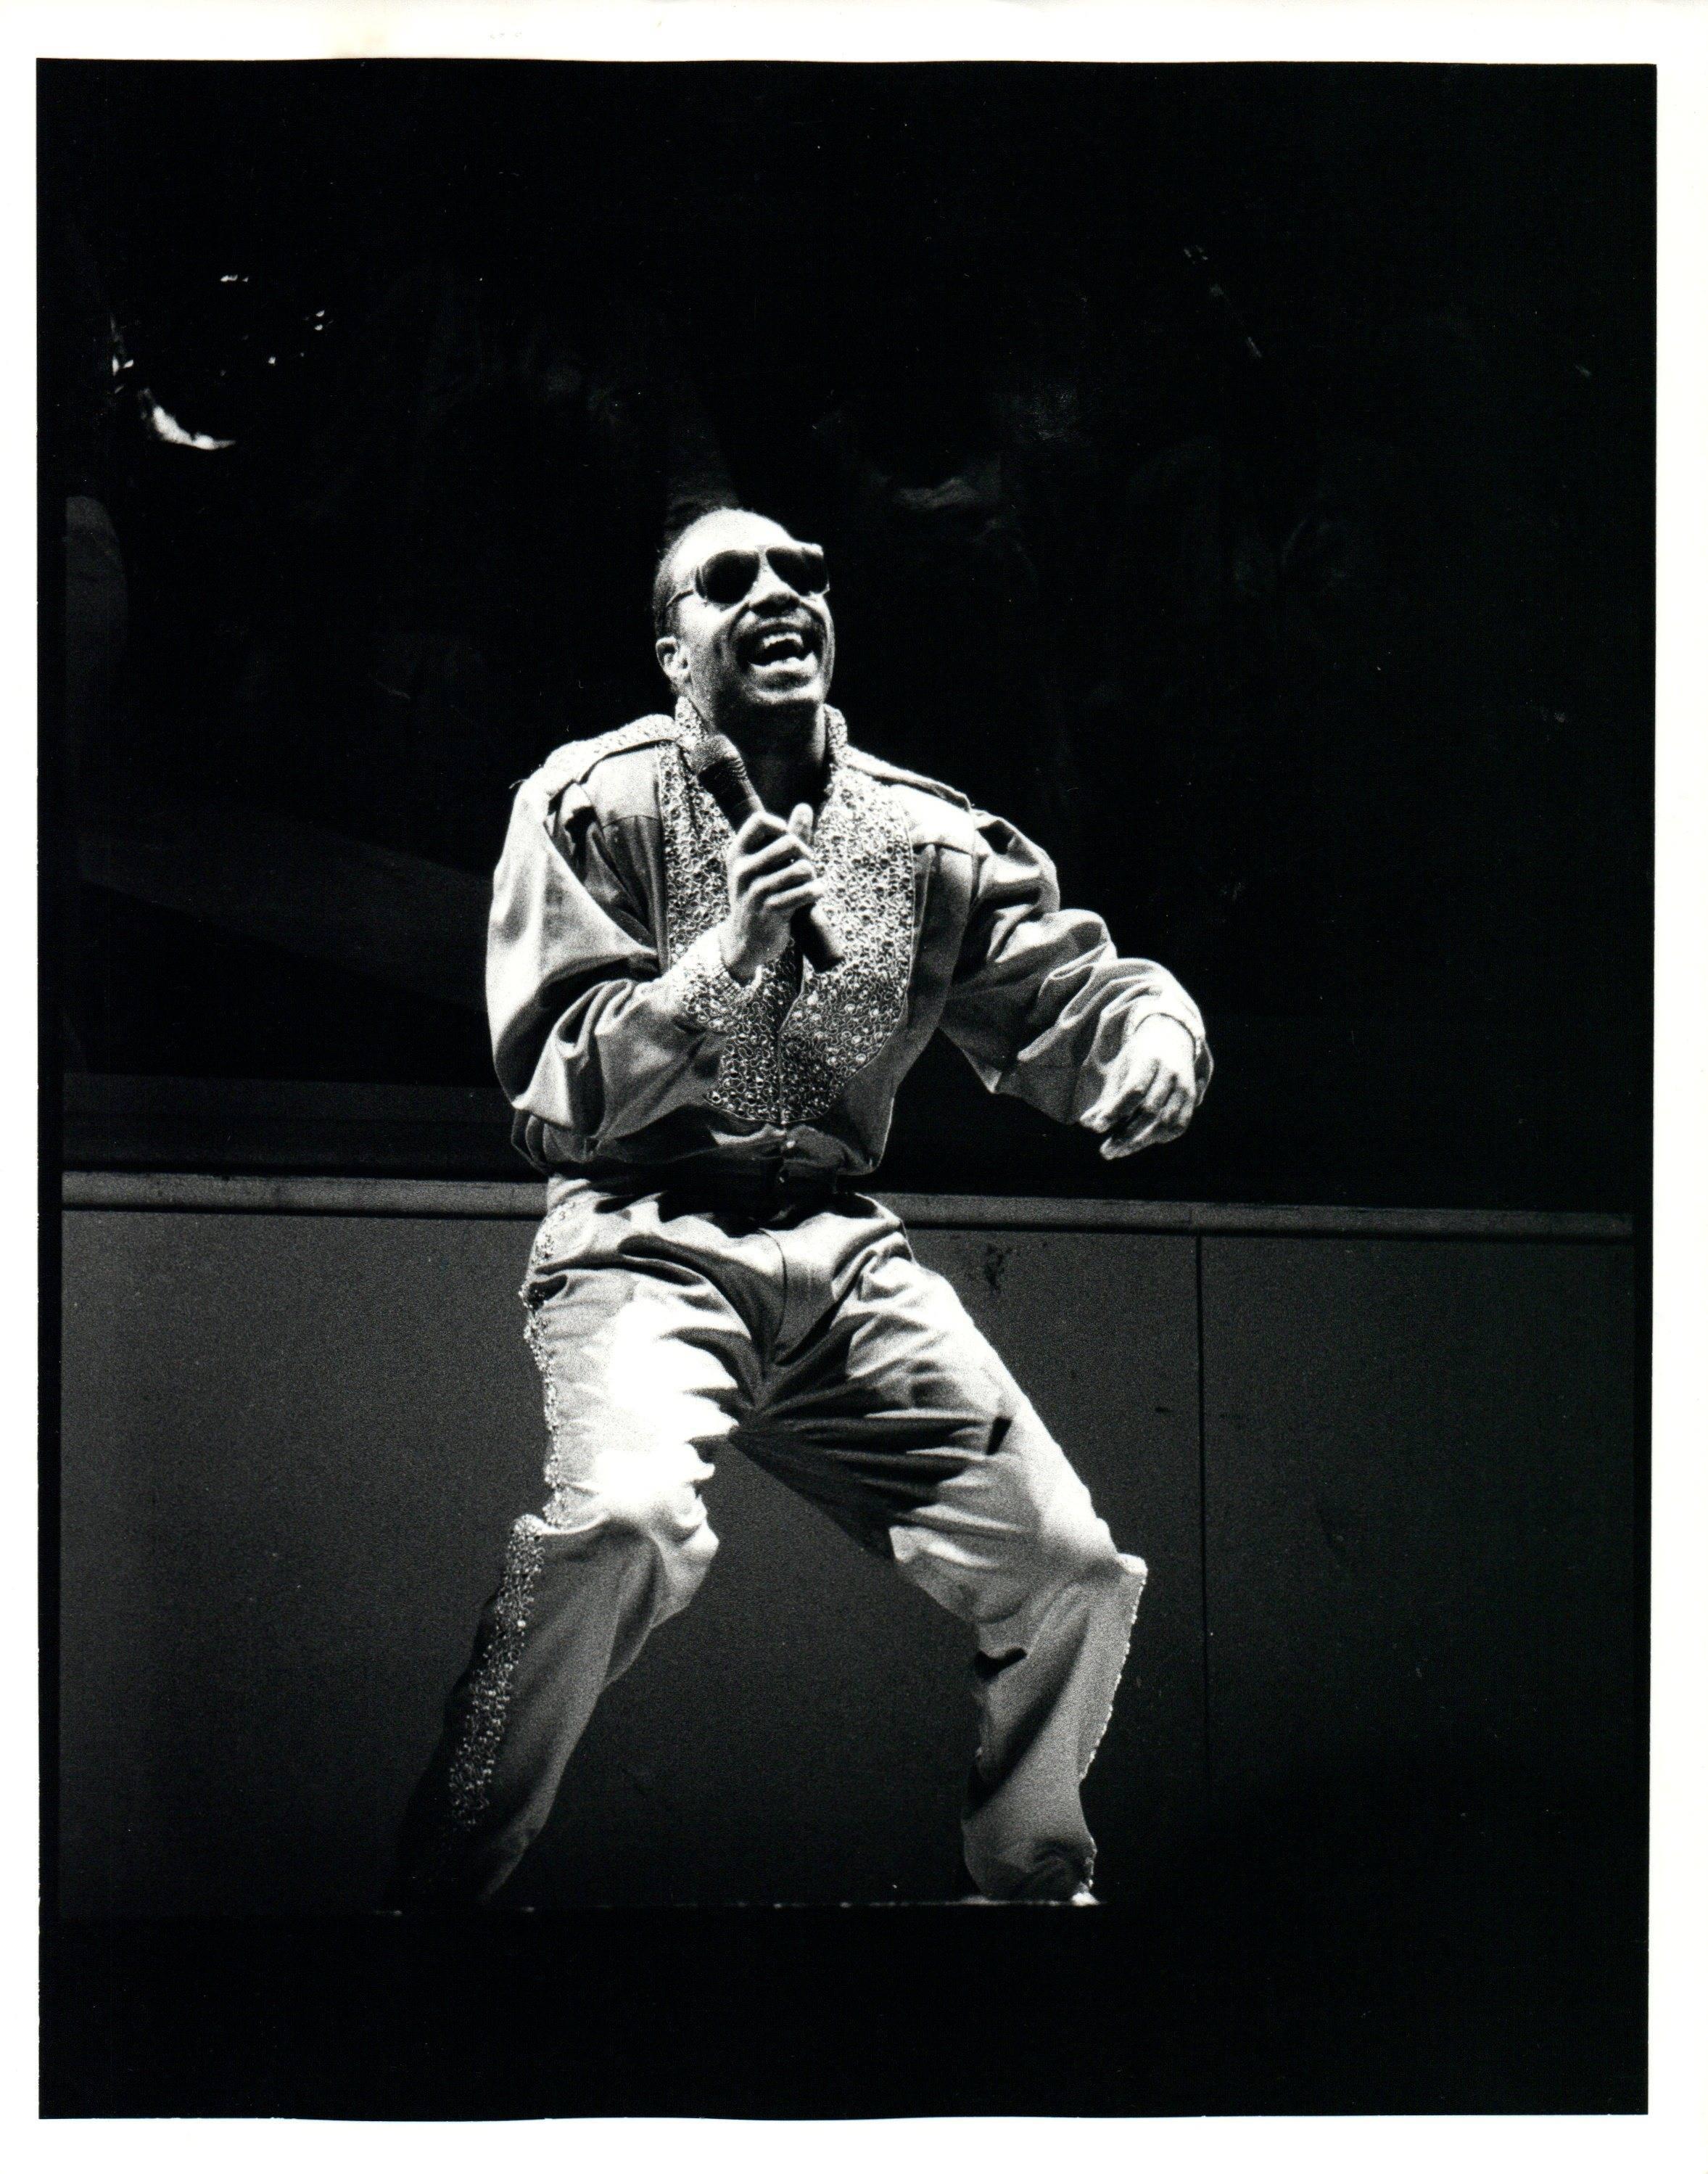 David Corio Black and White Photograph - Stevie Wonder Smiling on Stage Vintage Original Photograph